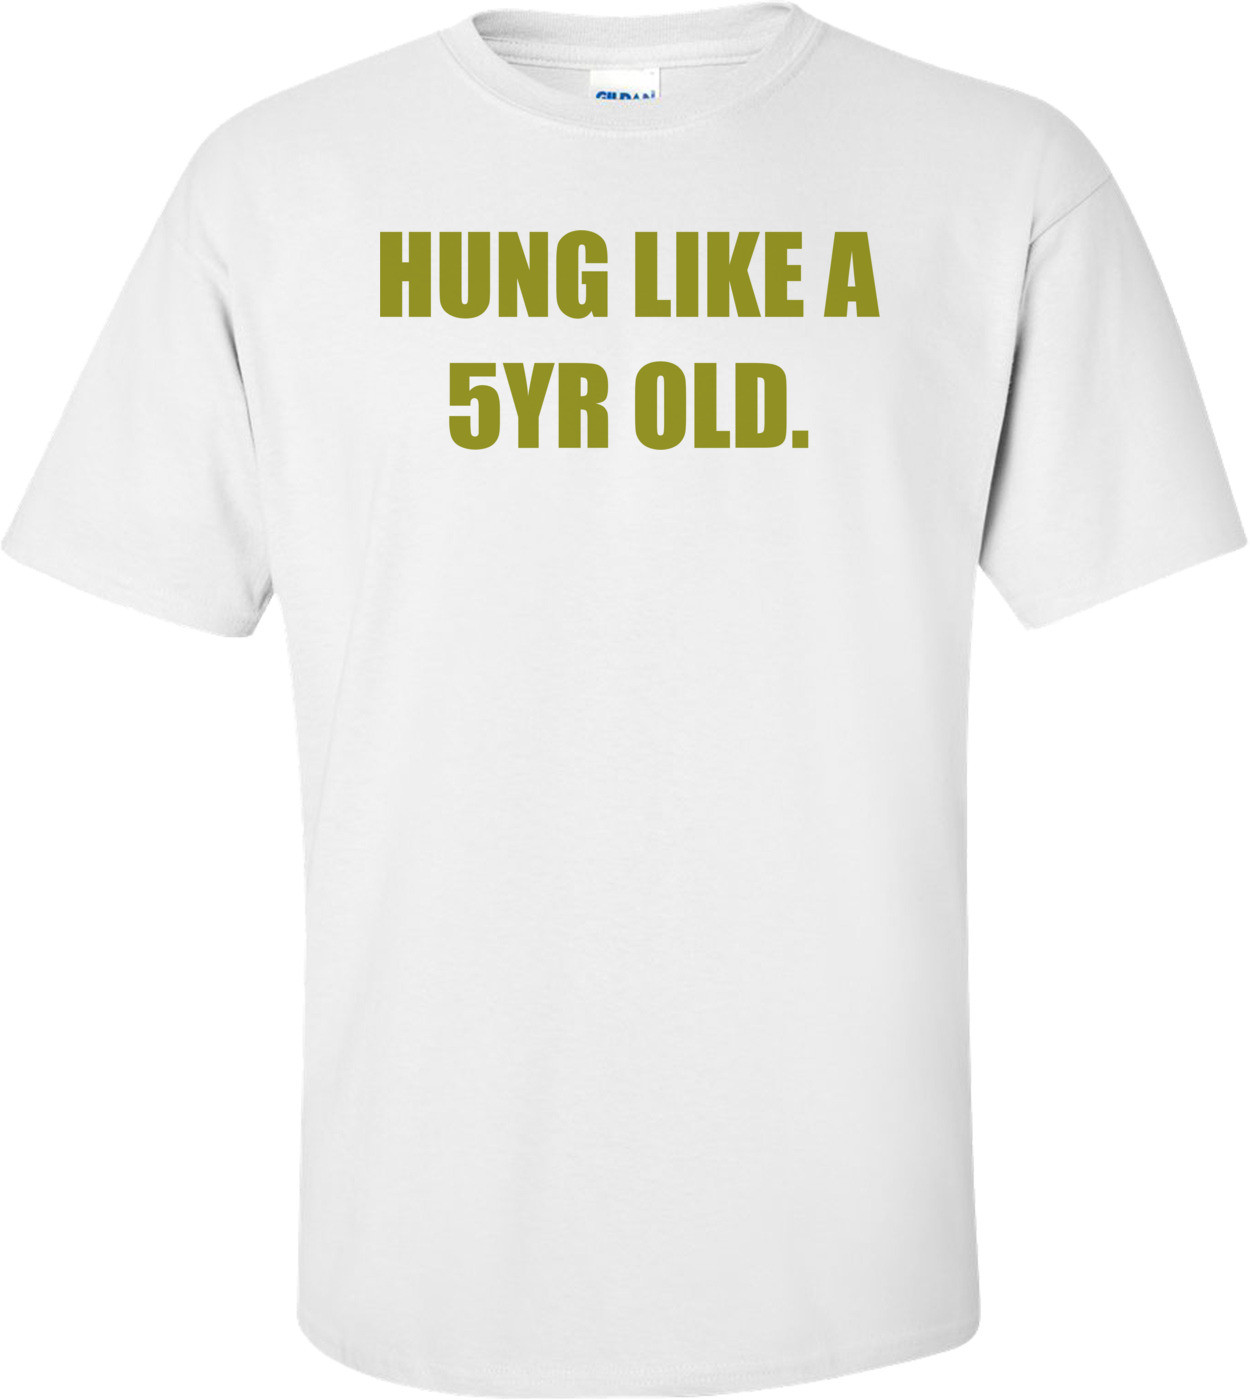 HUNG LIKE A 5YR OLD. Shirt